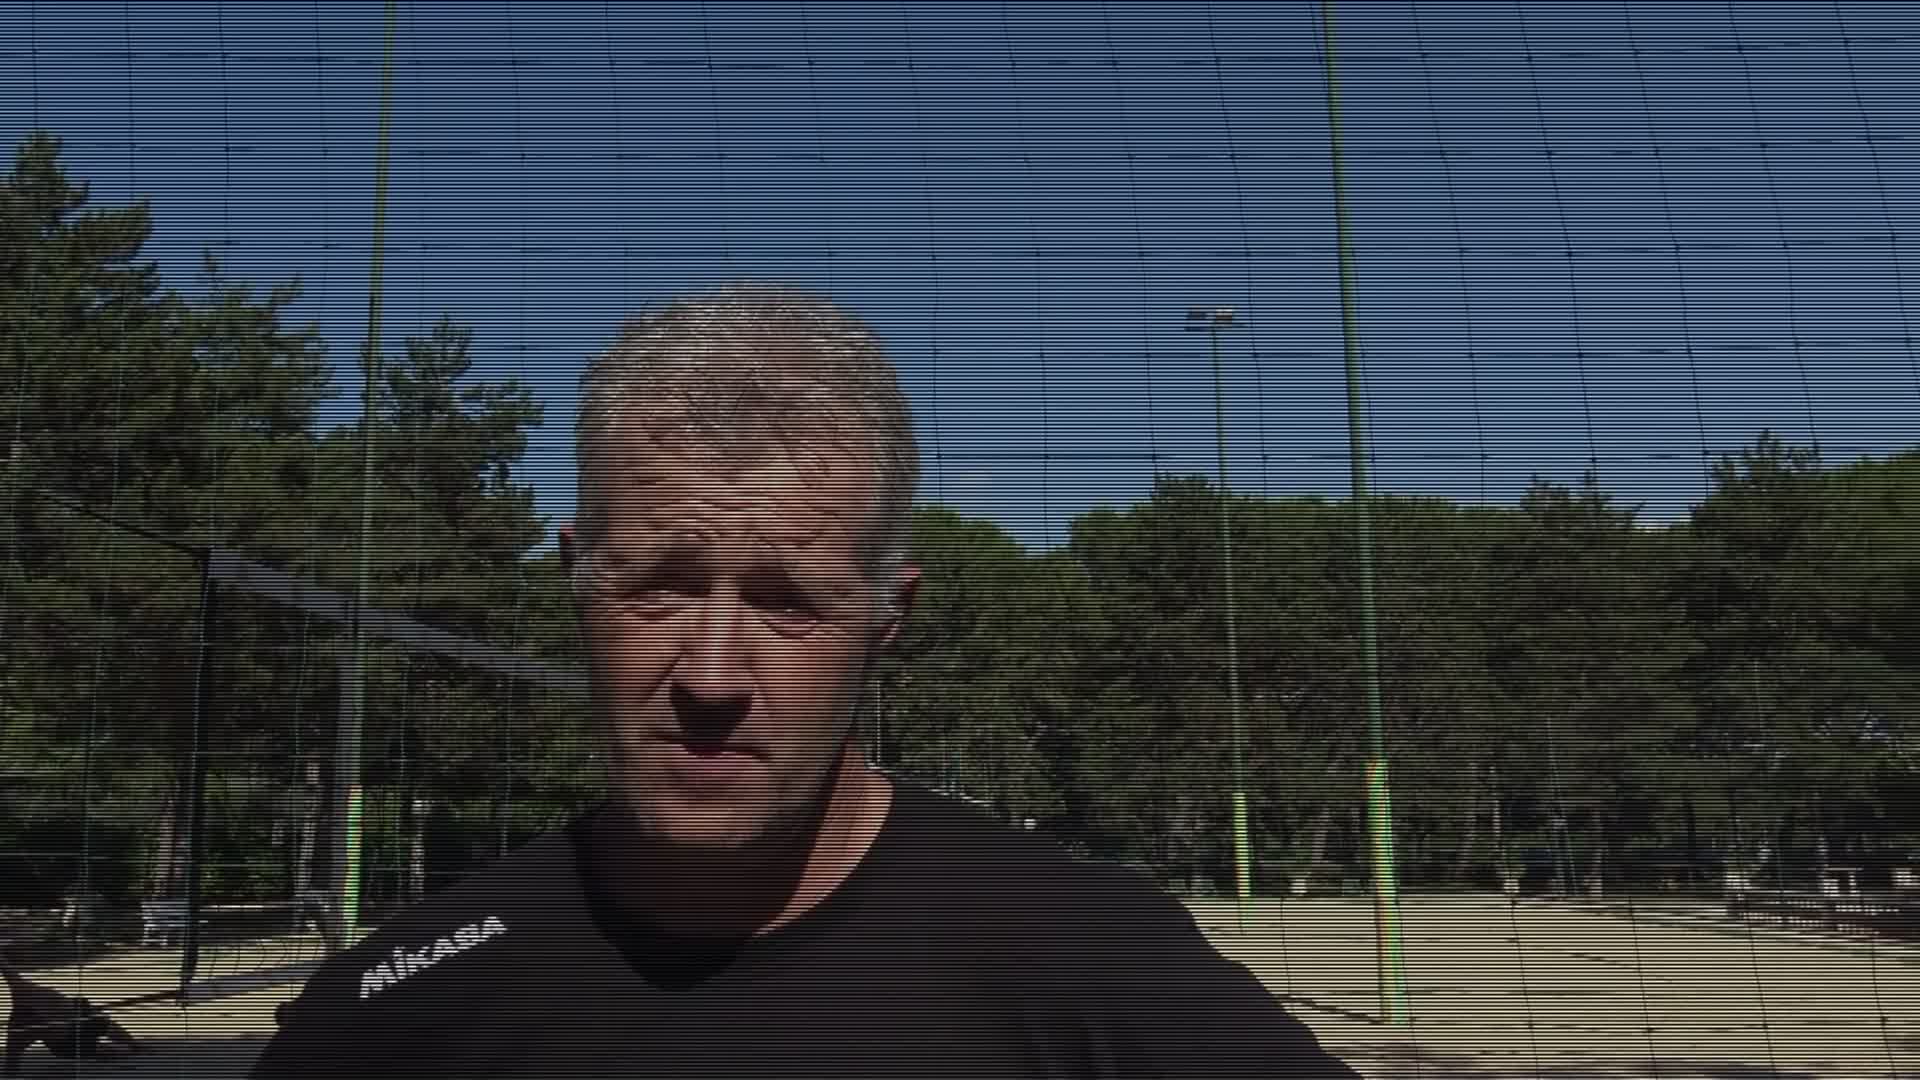 Sir Safety Conad, intervista (e siparietto) con coach Vital Heynen